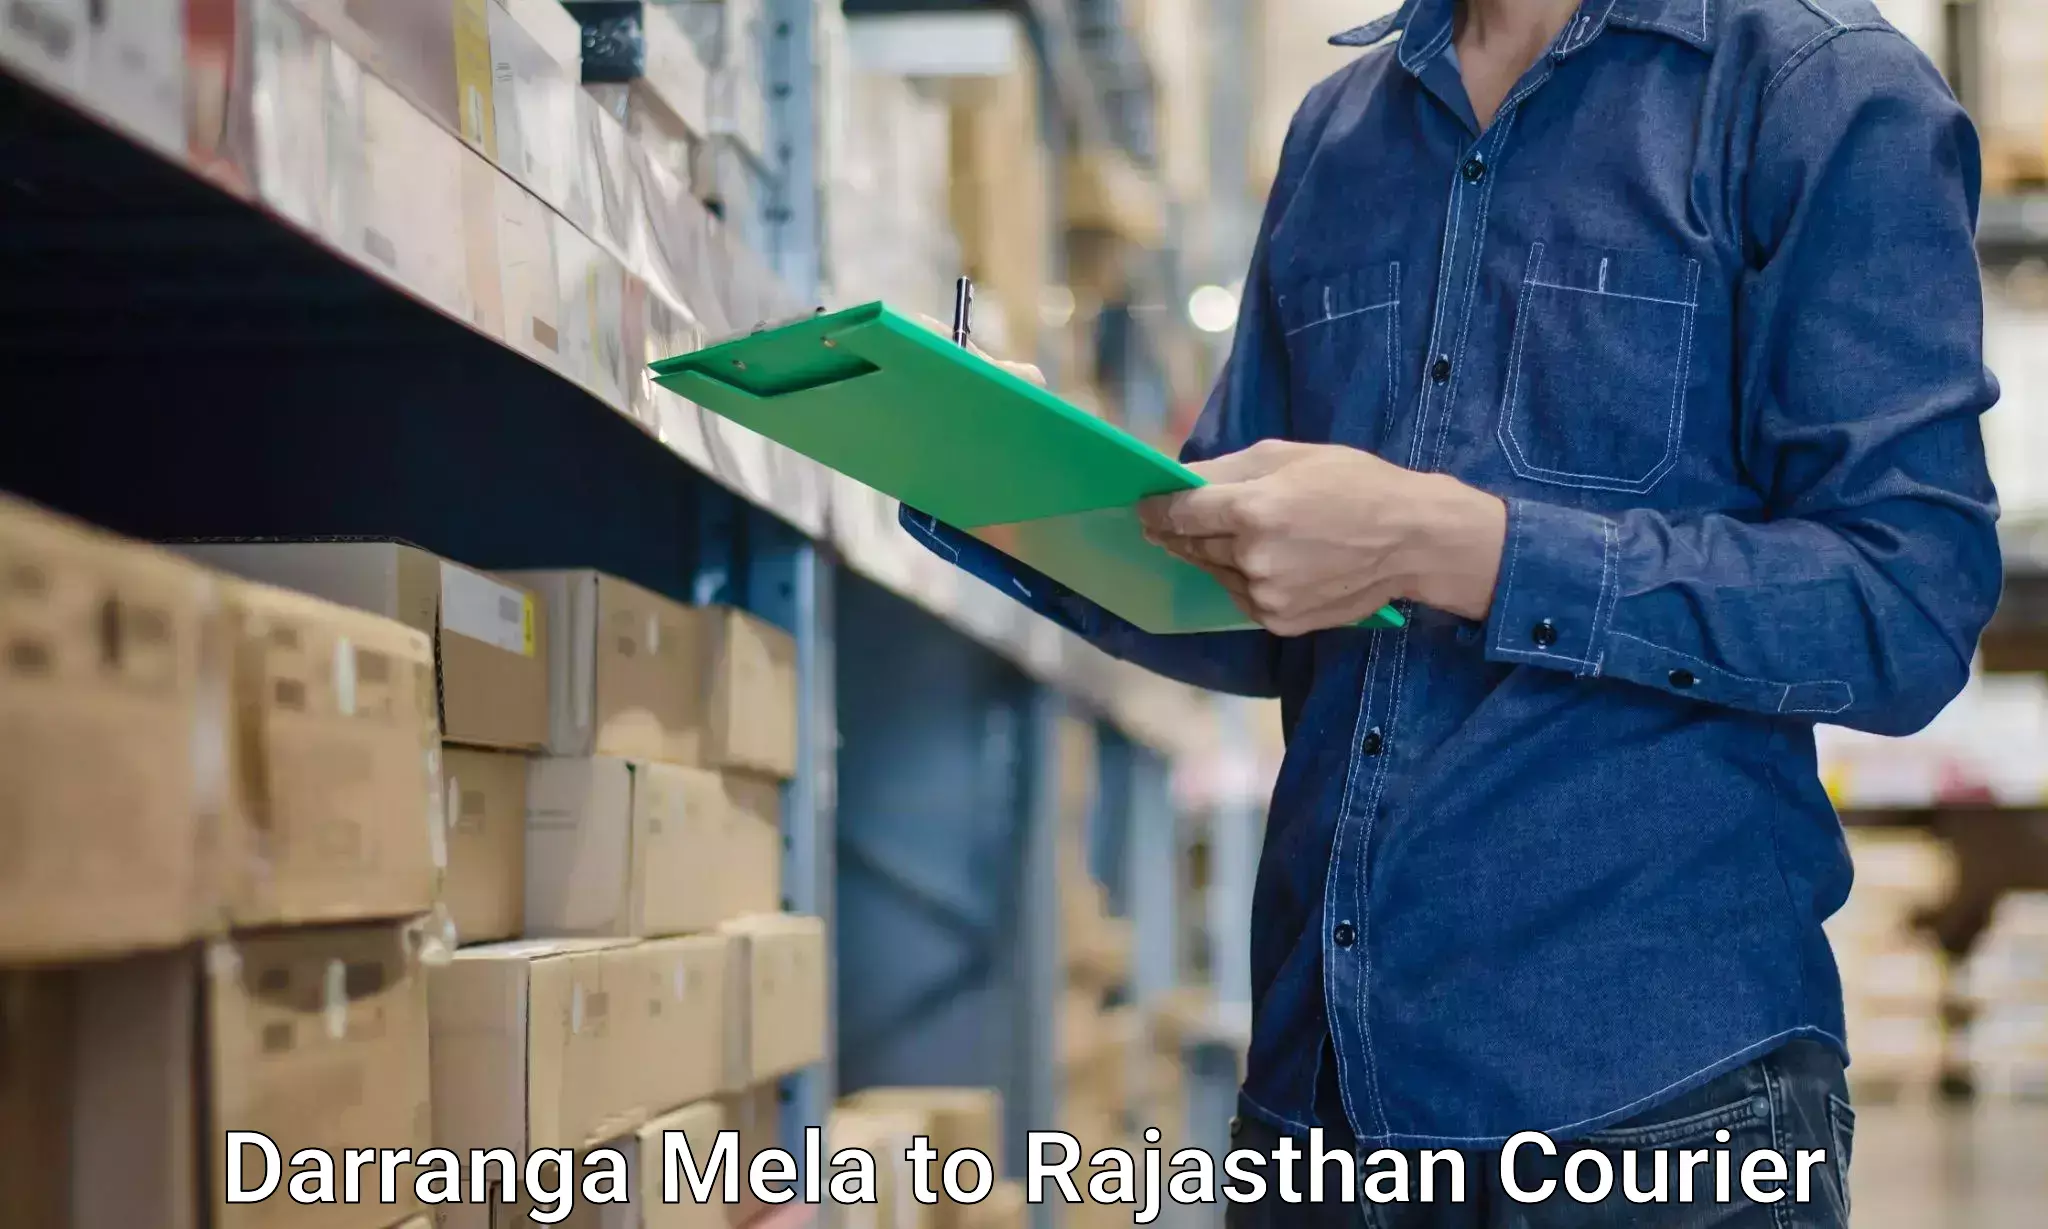 Specialized moving company Darranga Mela to Malsisar